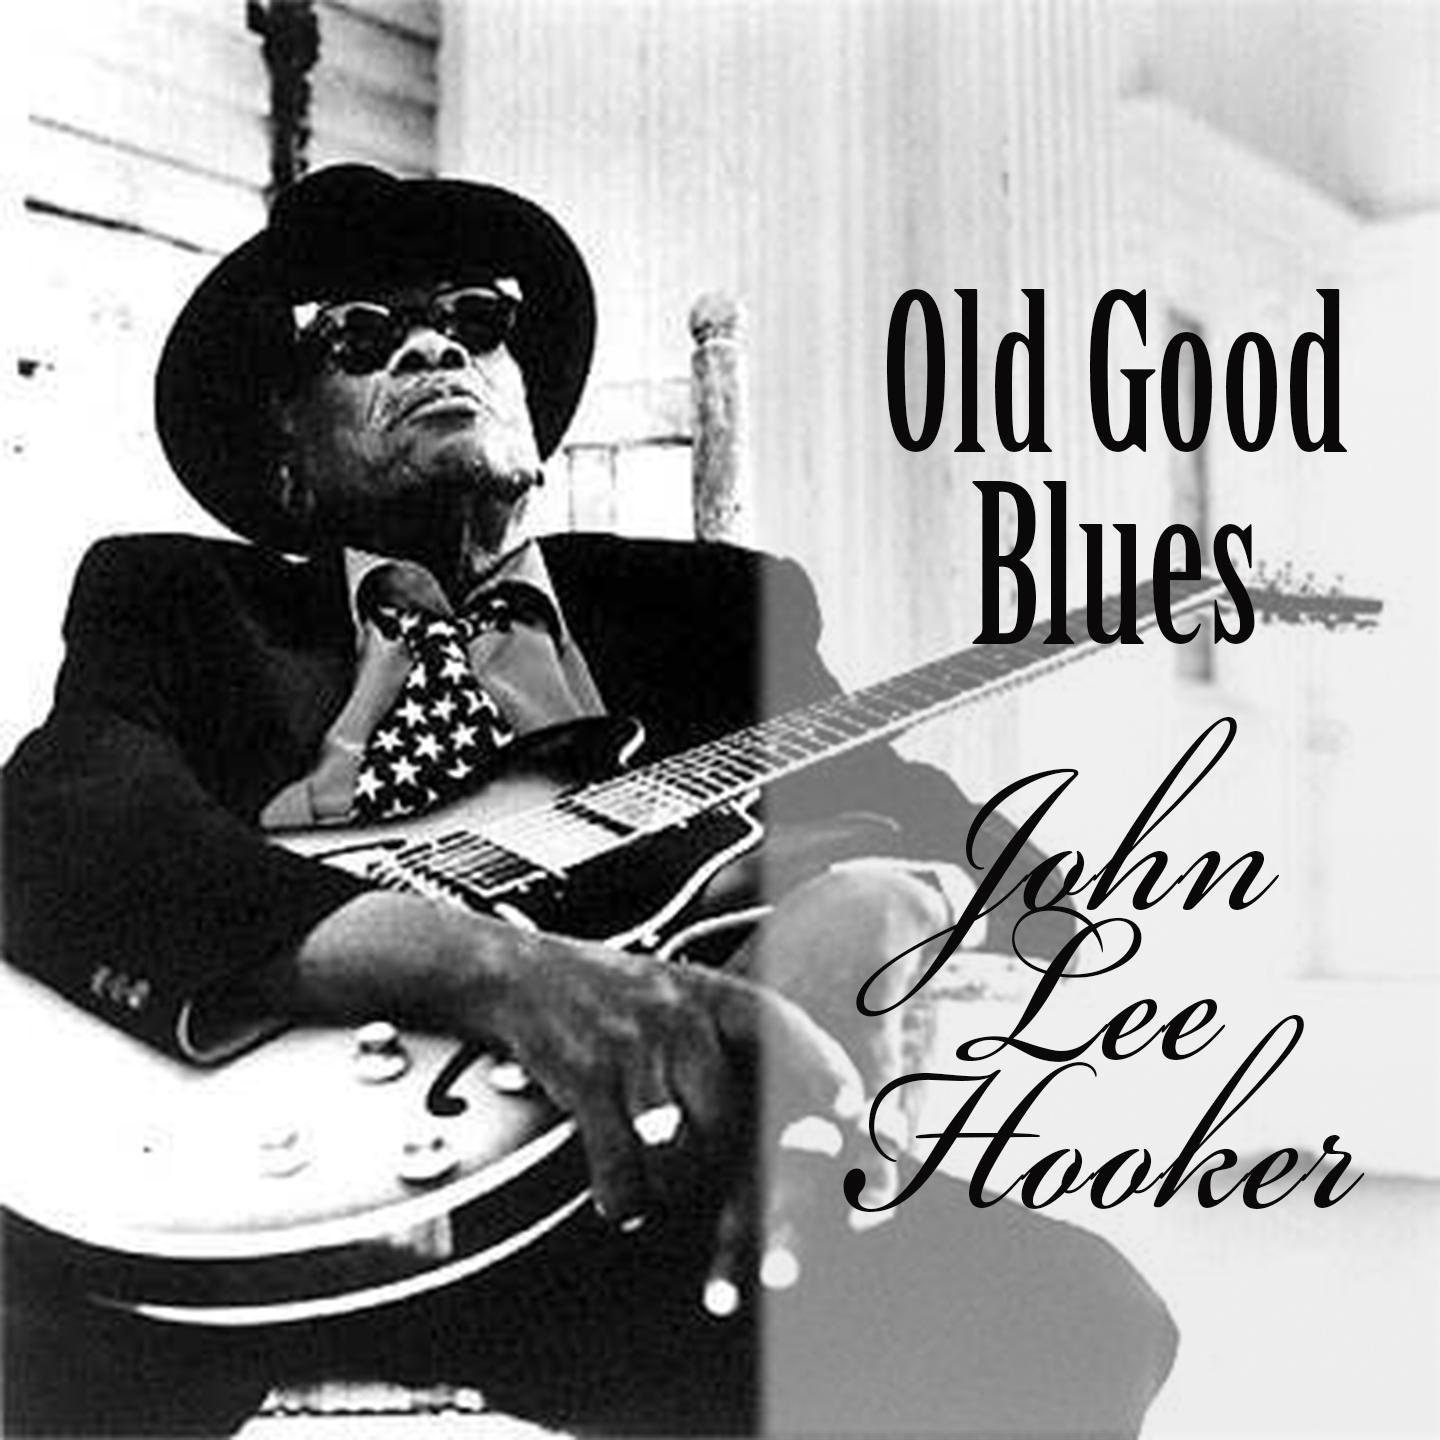 Old Good Blues, John Lee Hooker